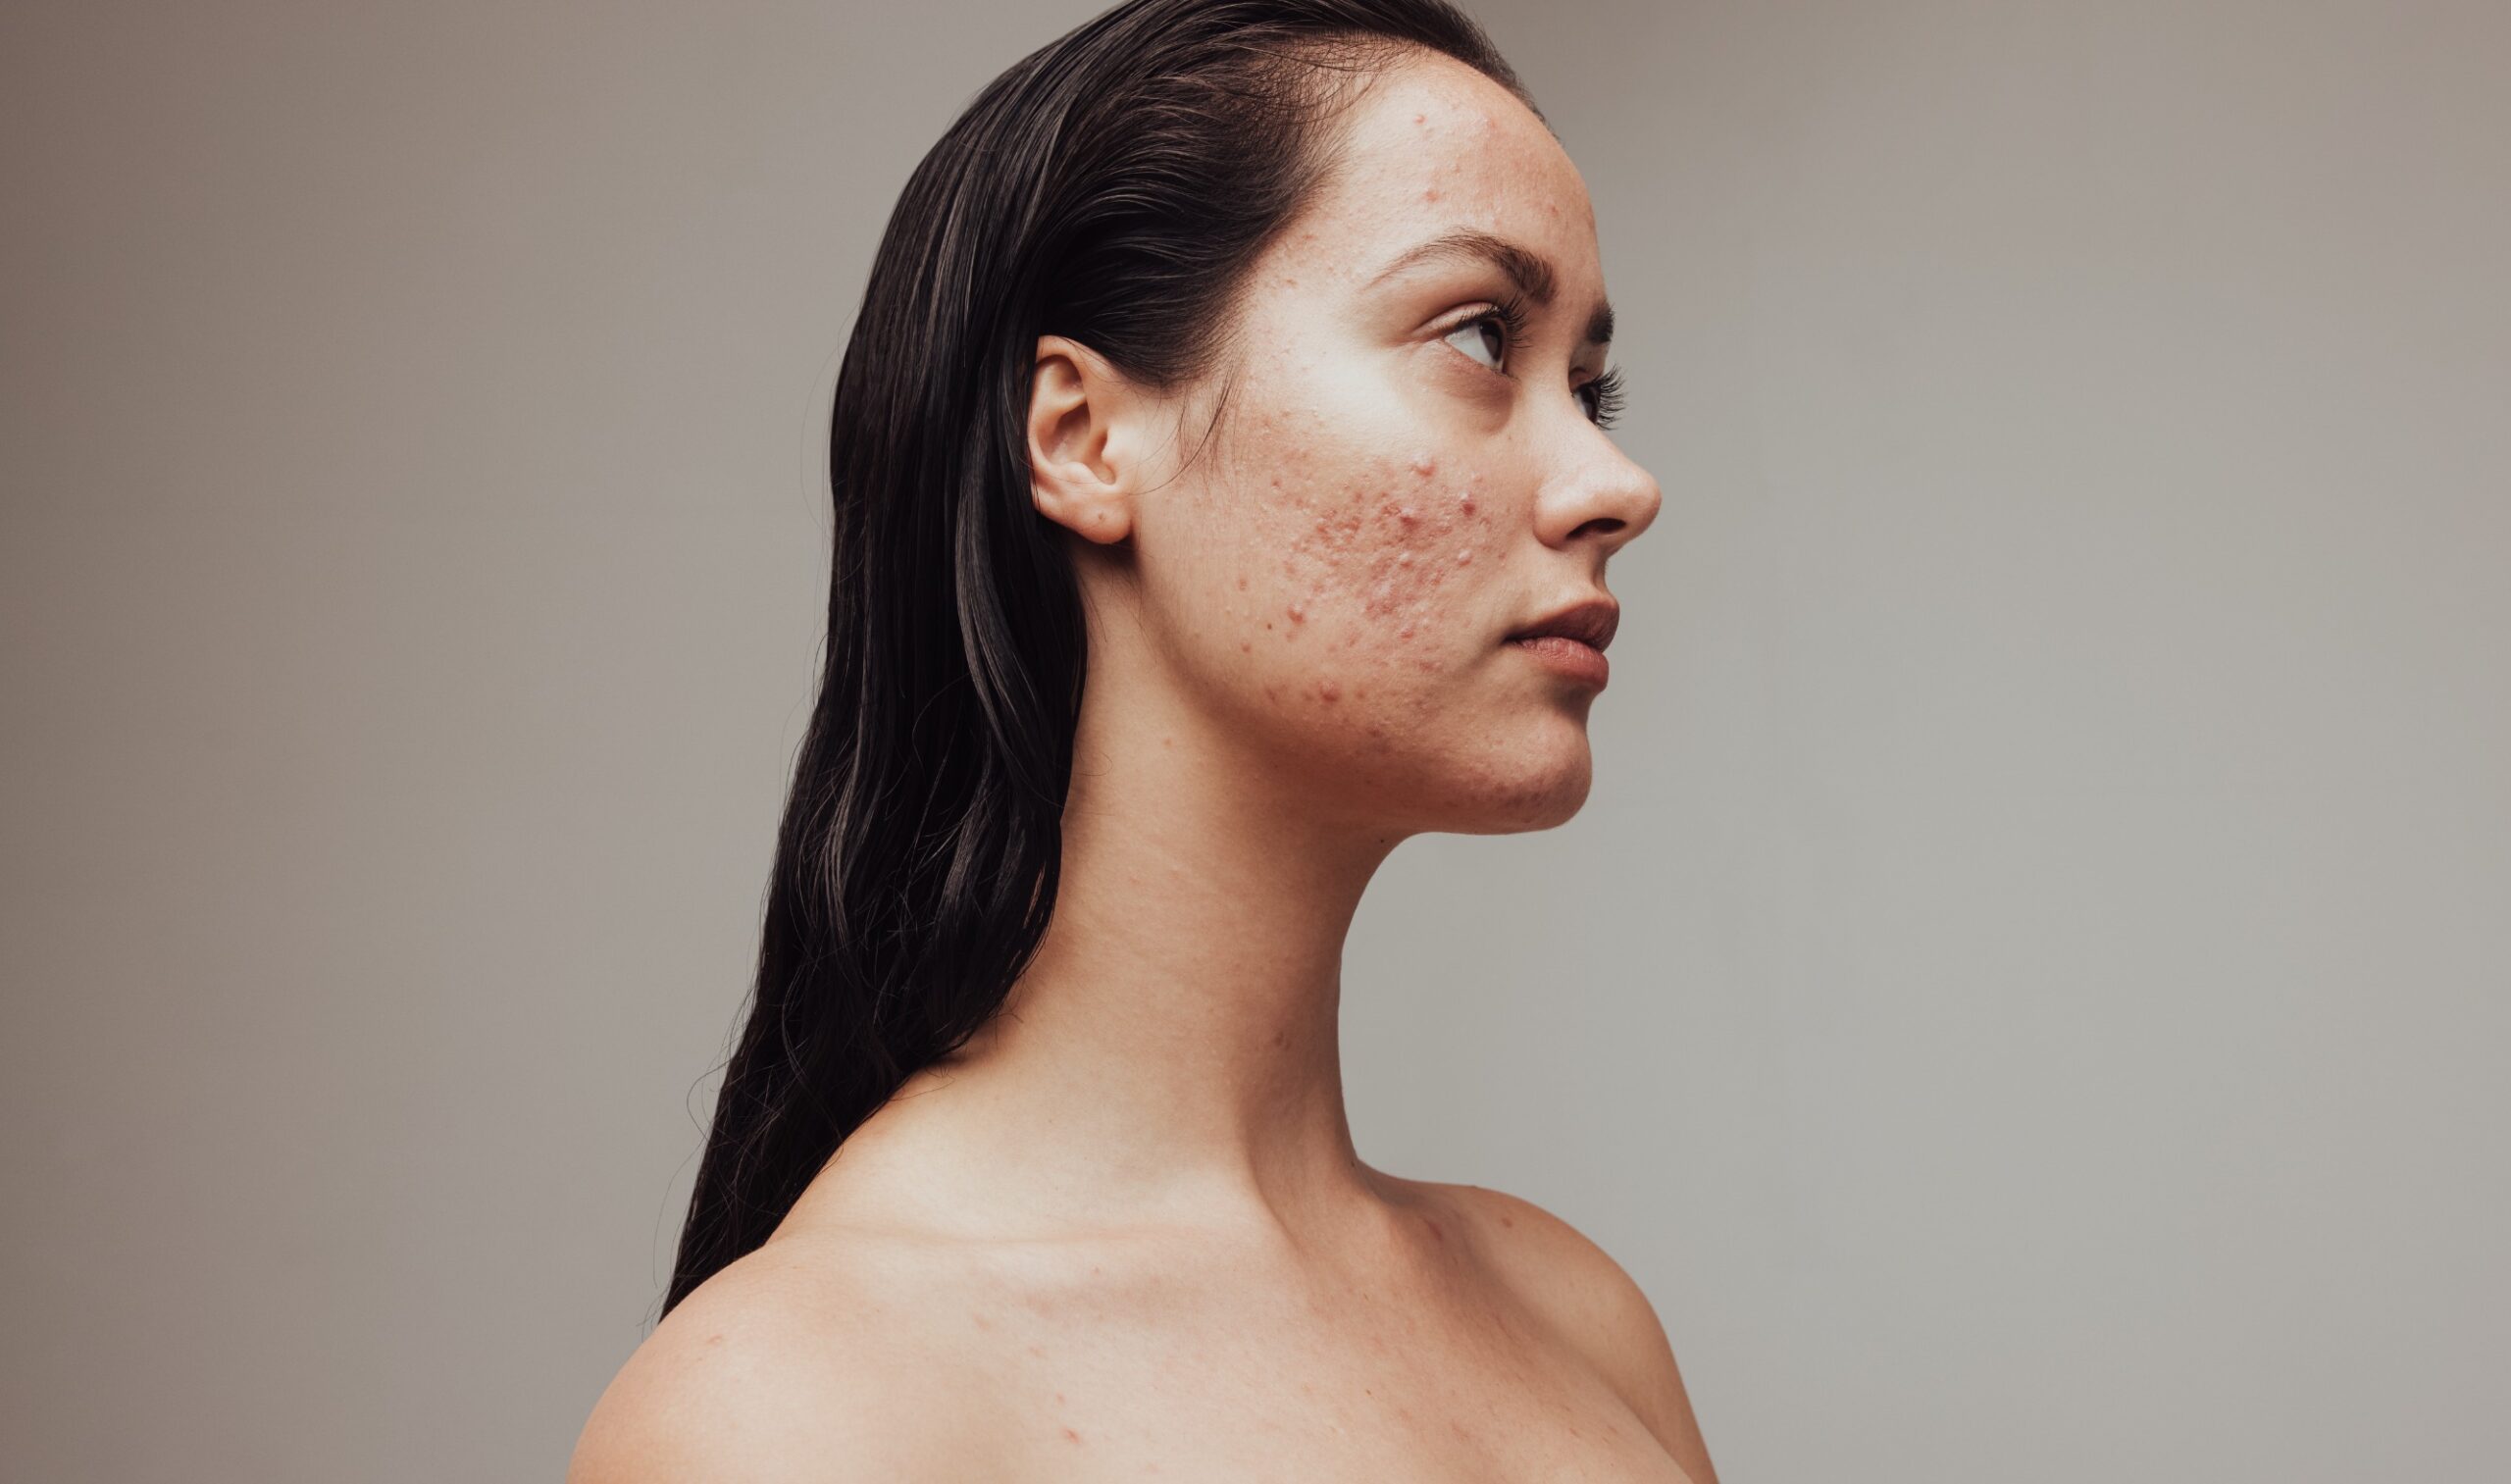 Acne and Acne Scar Treatments